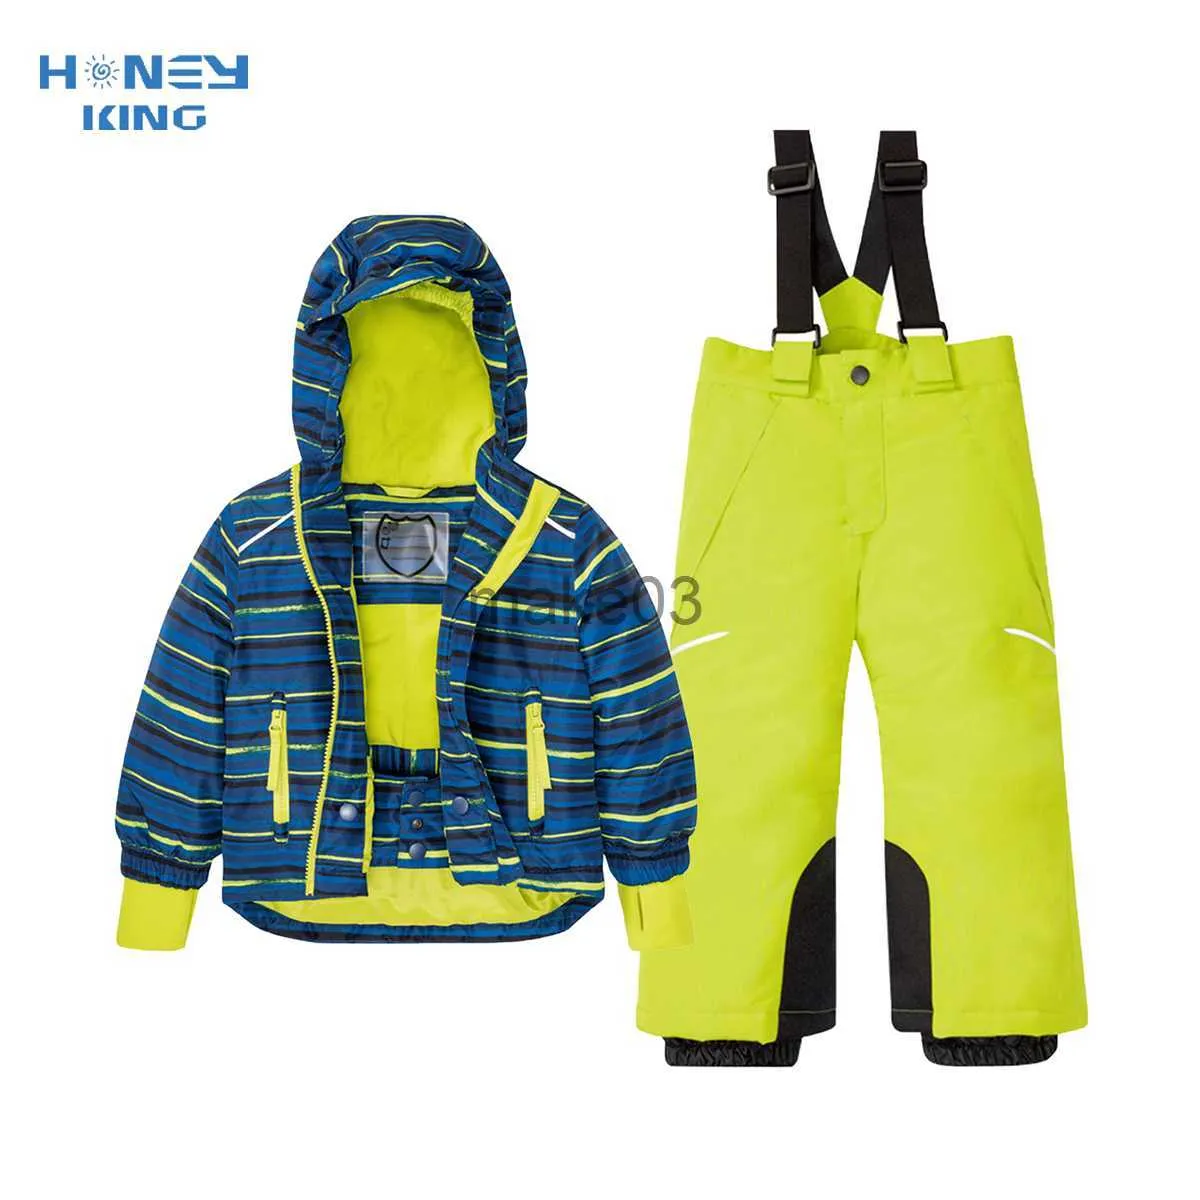 Down Coat HONEYKING Children Outfit Snowsuit Ski Suit Winter Outdoor Sports Warm Windproof Waterproof Snowboard Jacket and Pants 2pcs Set J230823